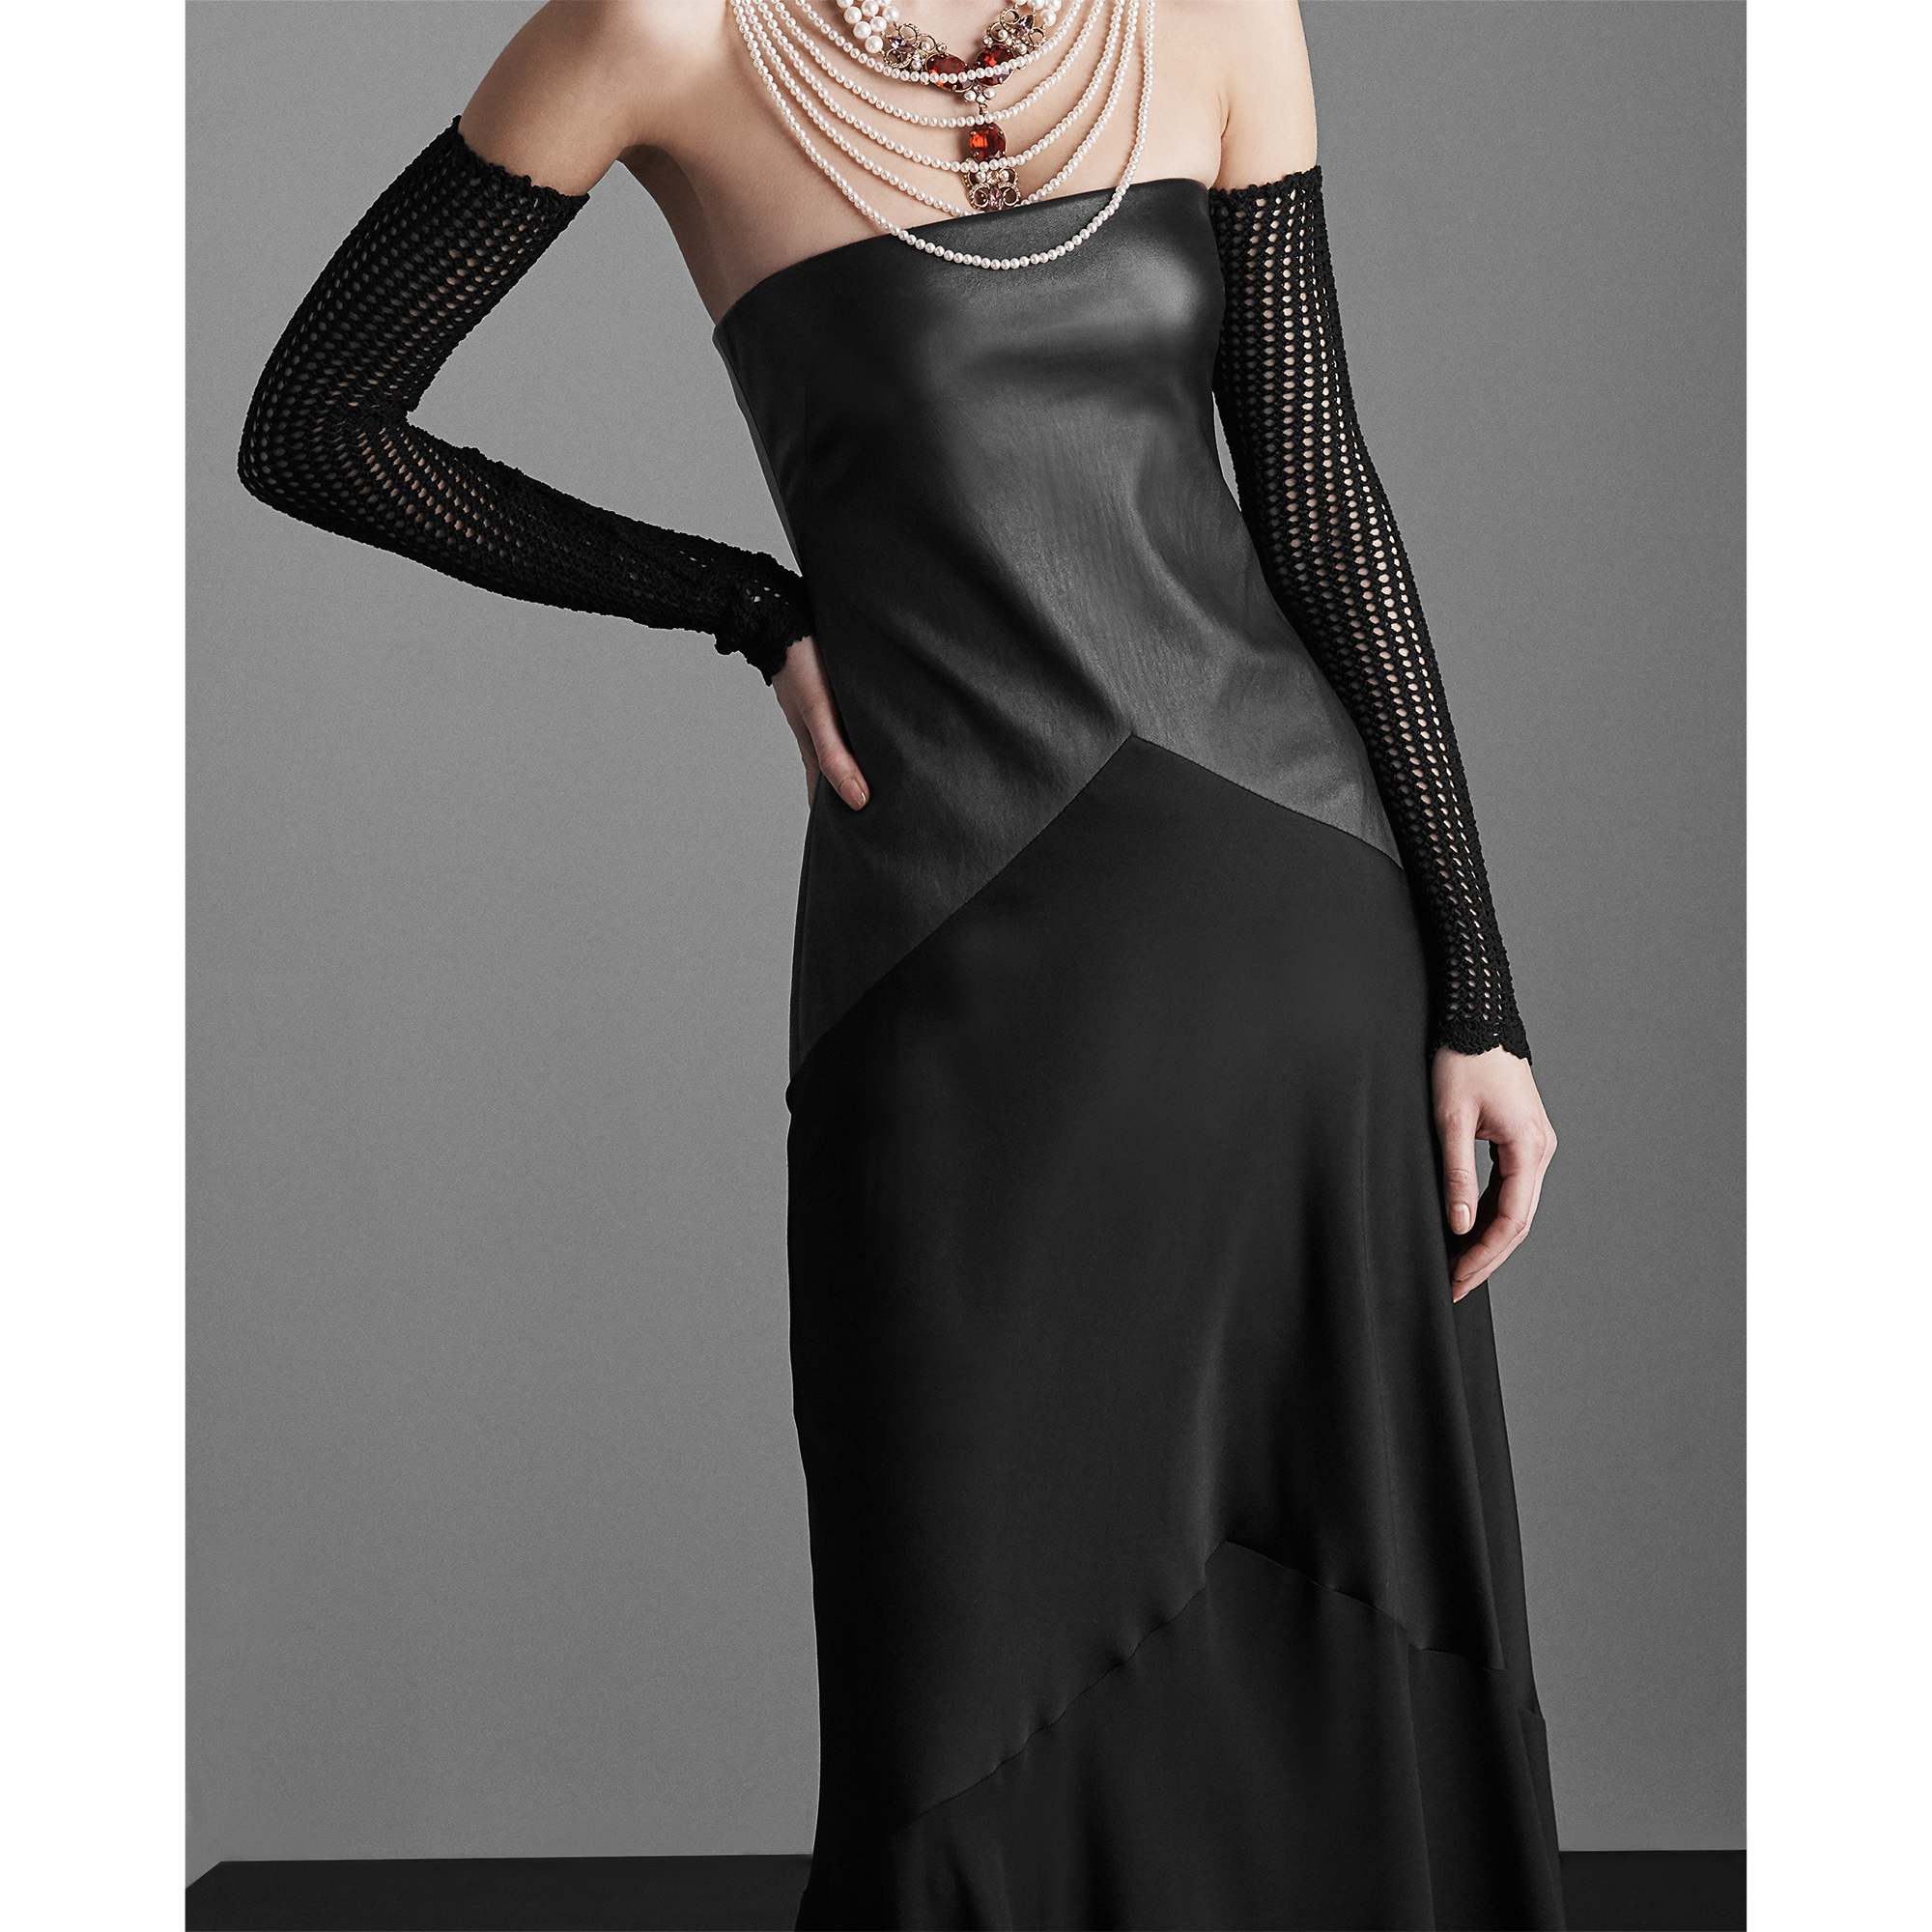 Ralph Lauren Emerick Evening Gown. 6